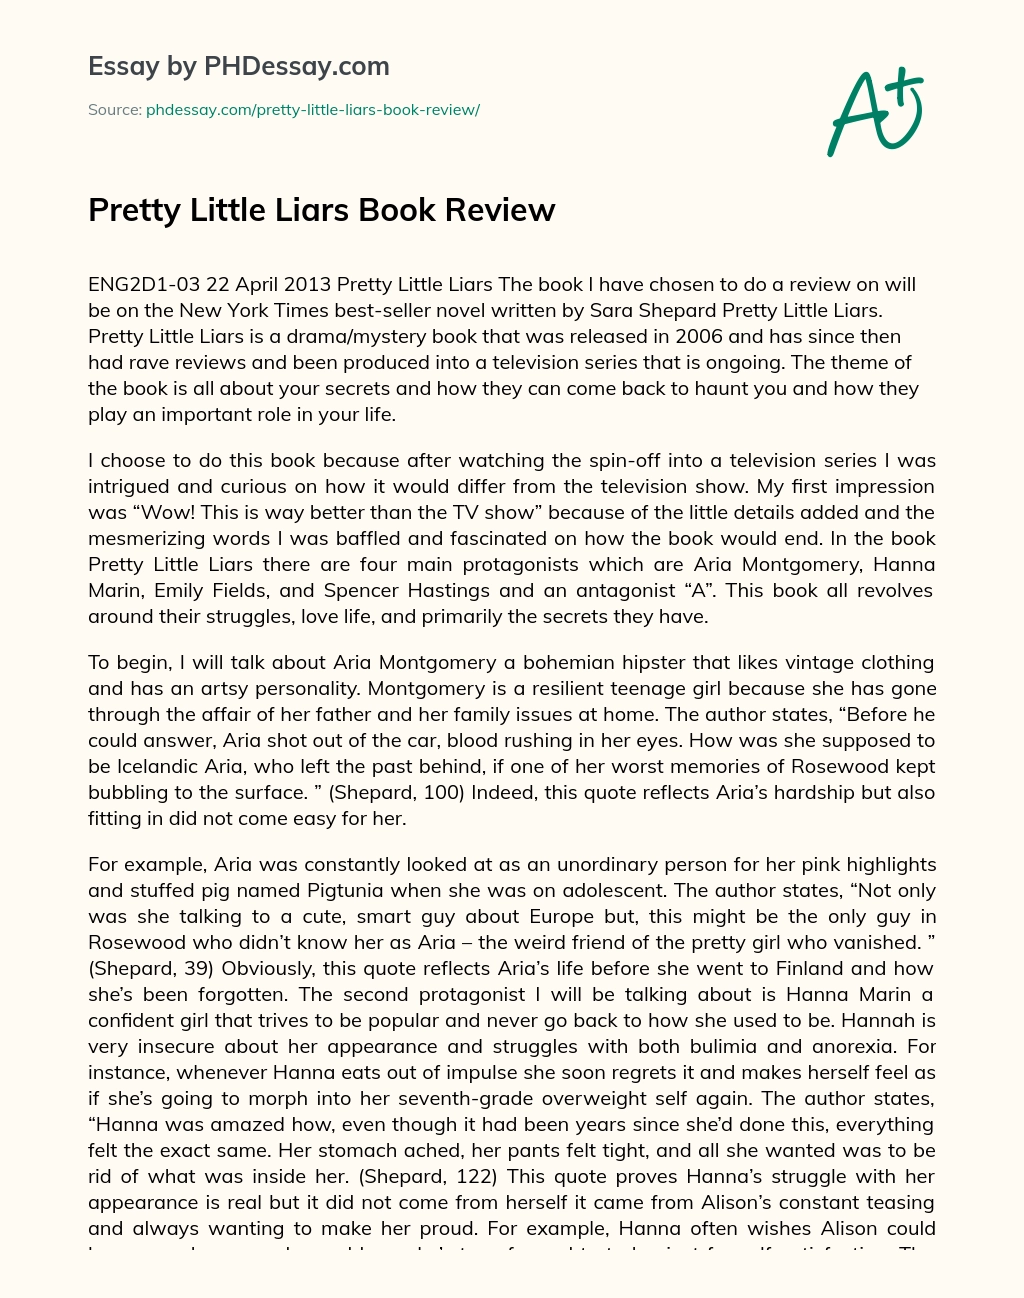 Pretty Little Liars Book Review essay